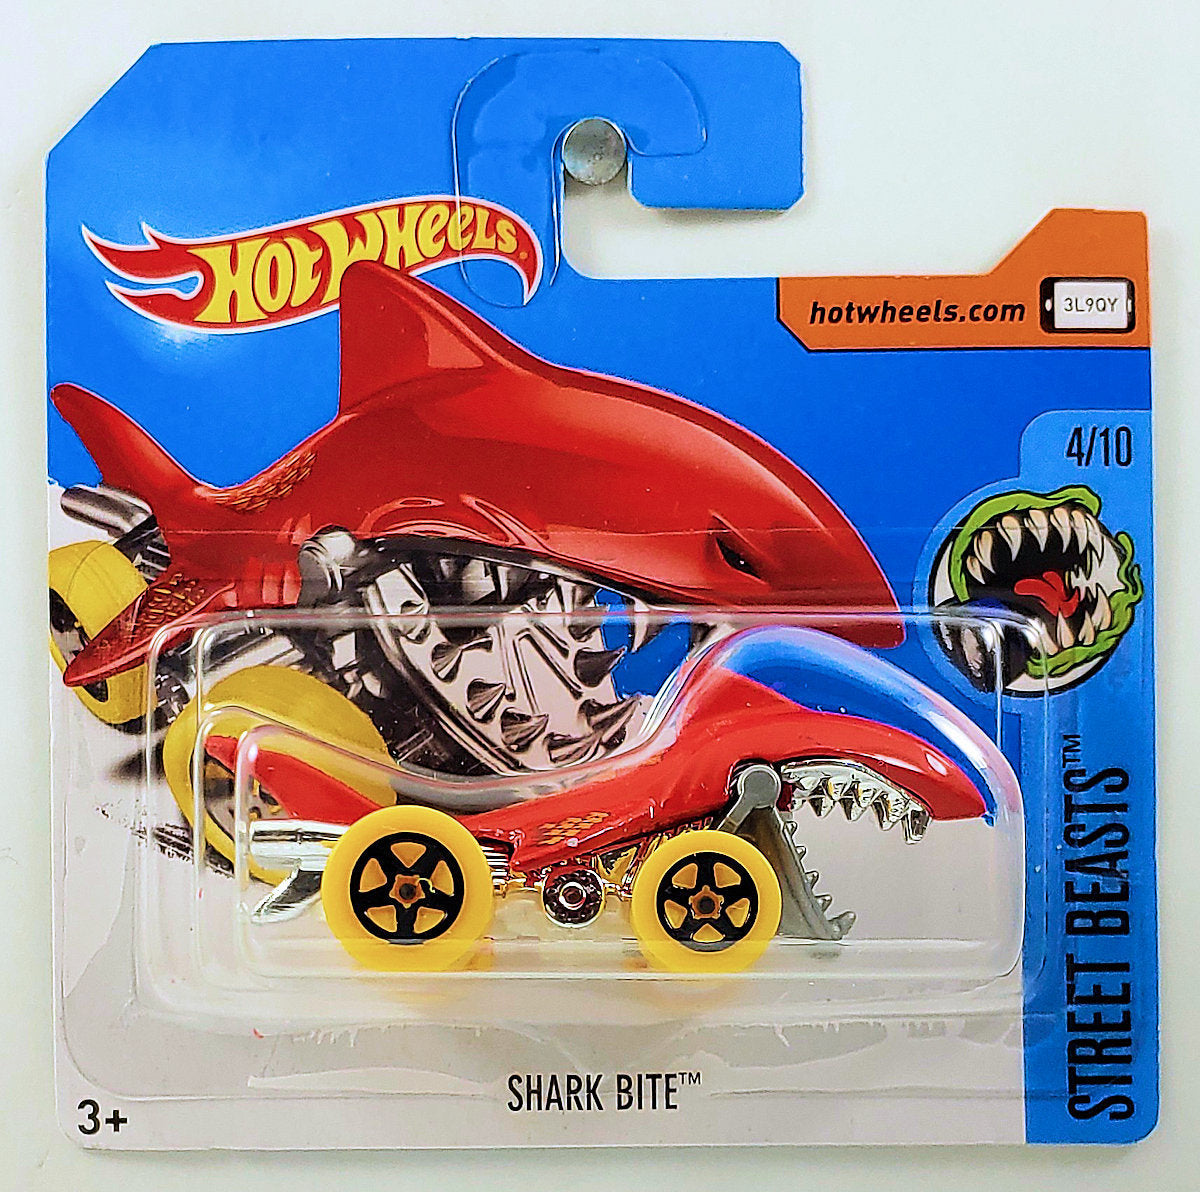 Hot Wheels 2017 - Collector # 345/365 - Street Beasts 4/10 - Shark Bite - Red - SC